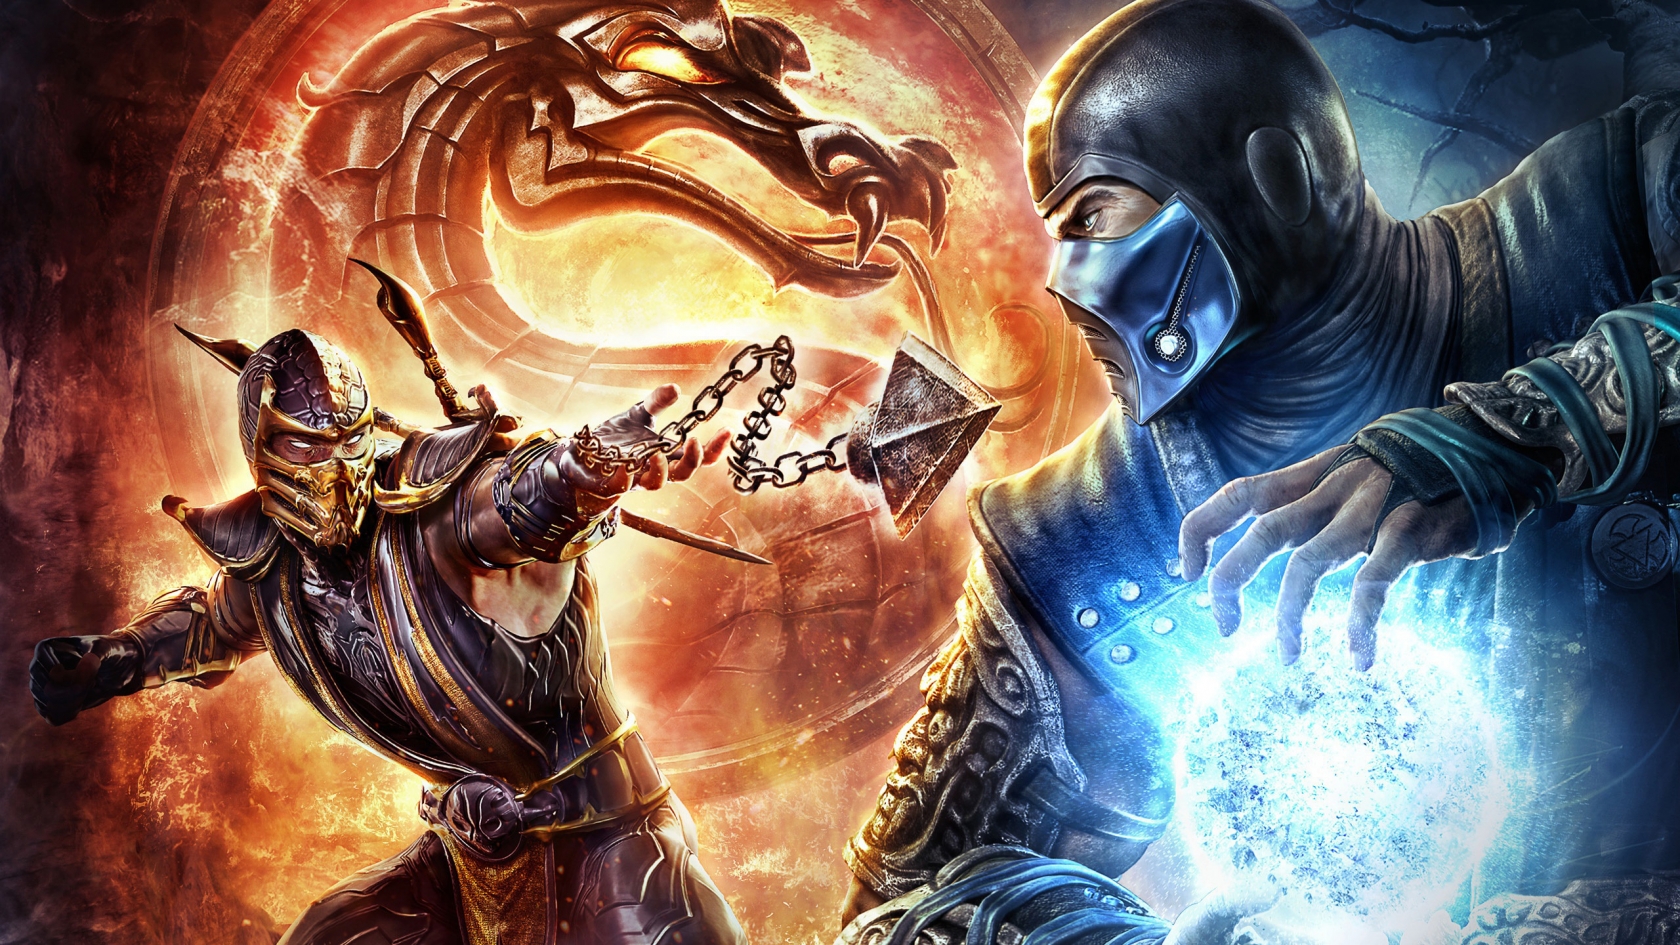 Scorpions vs Sub Zero Mortal Kombat for 1680 x 945 HDTV resolution